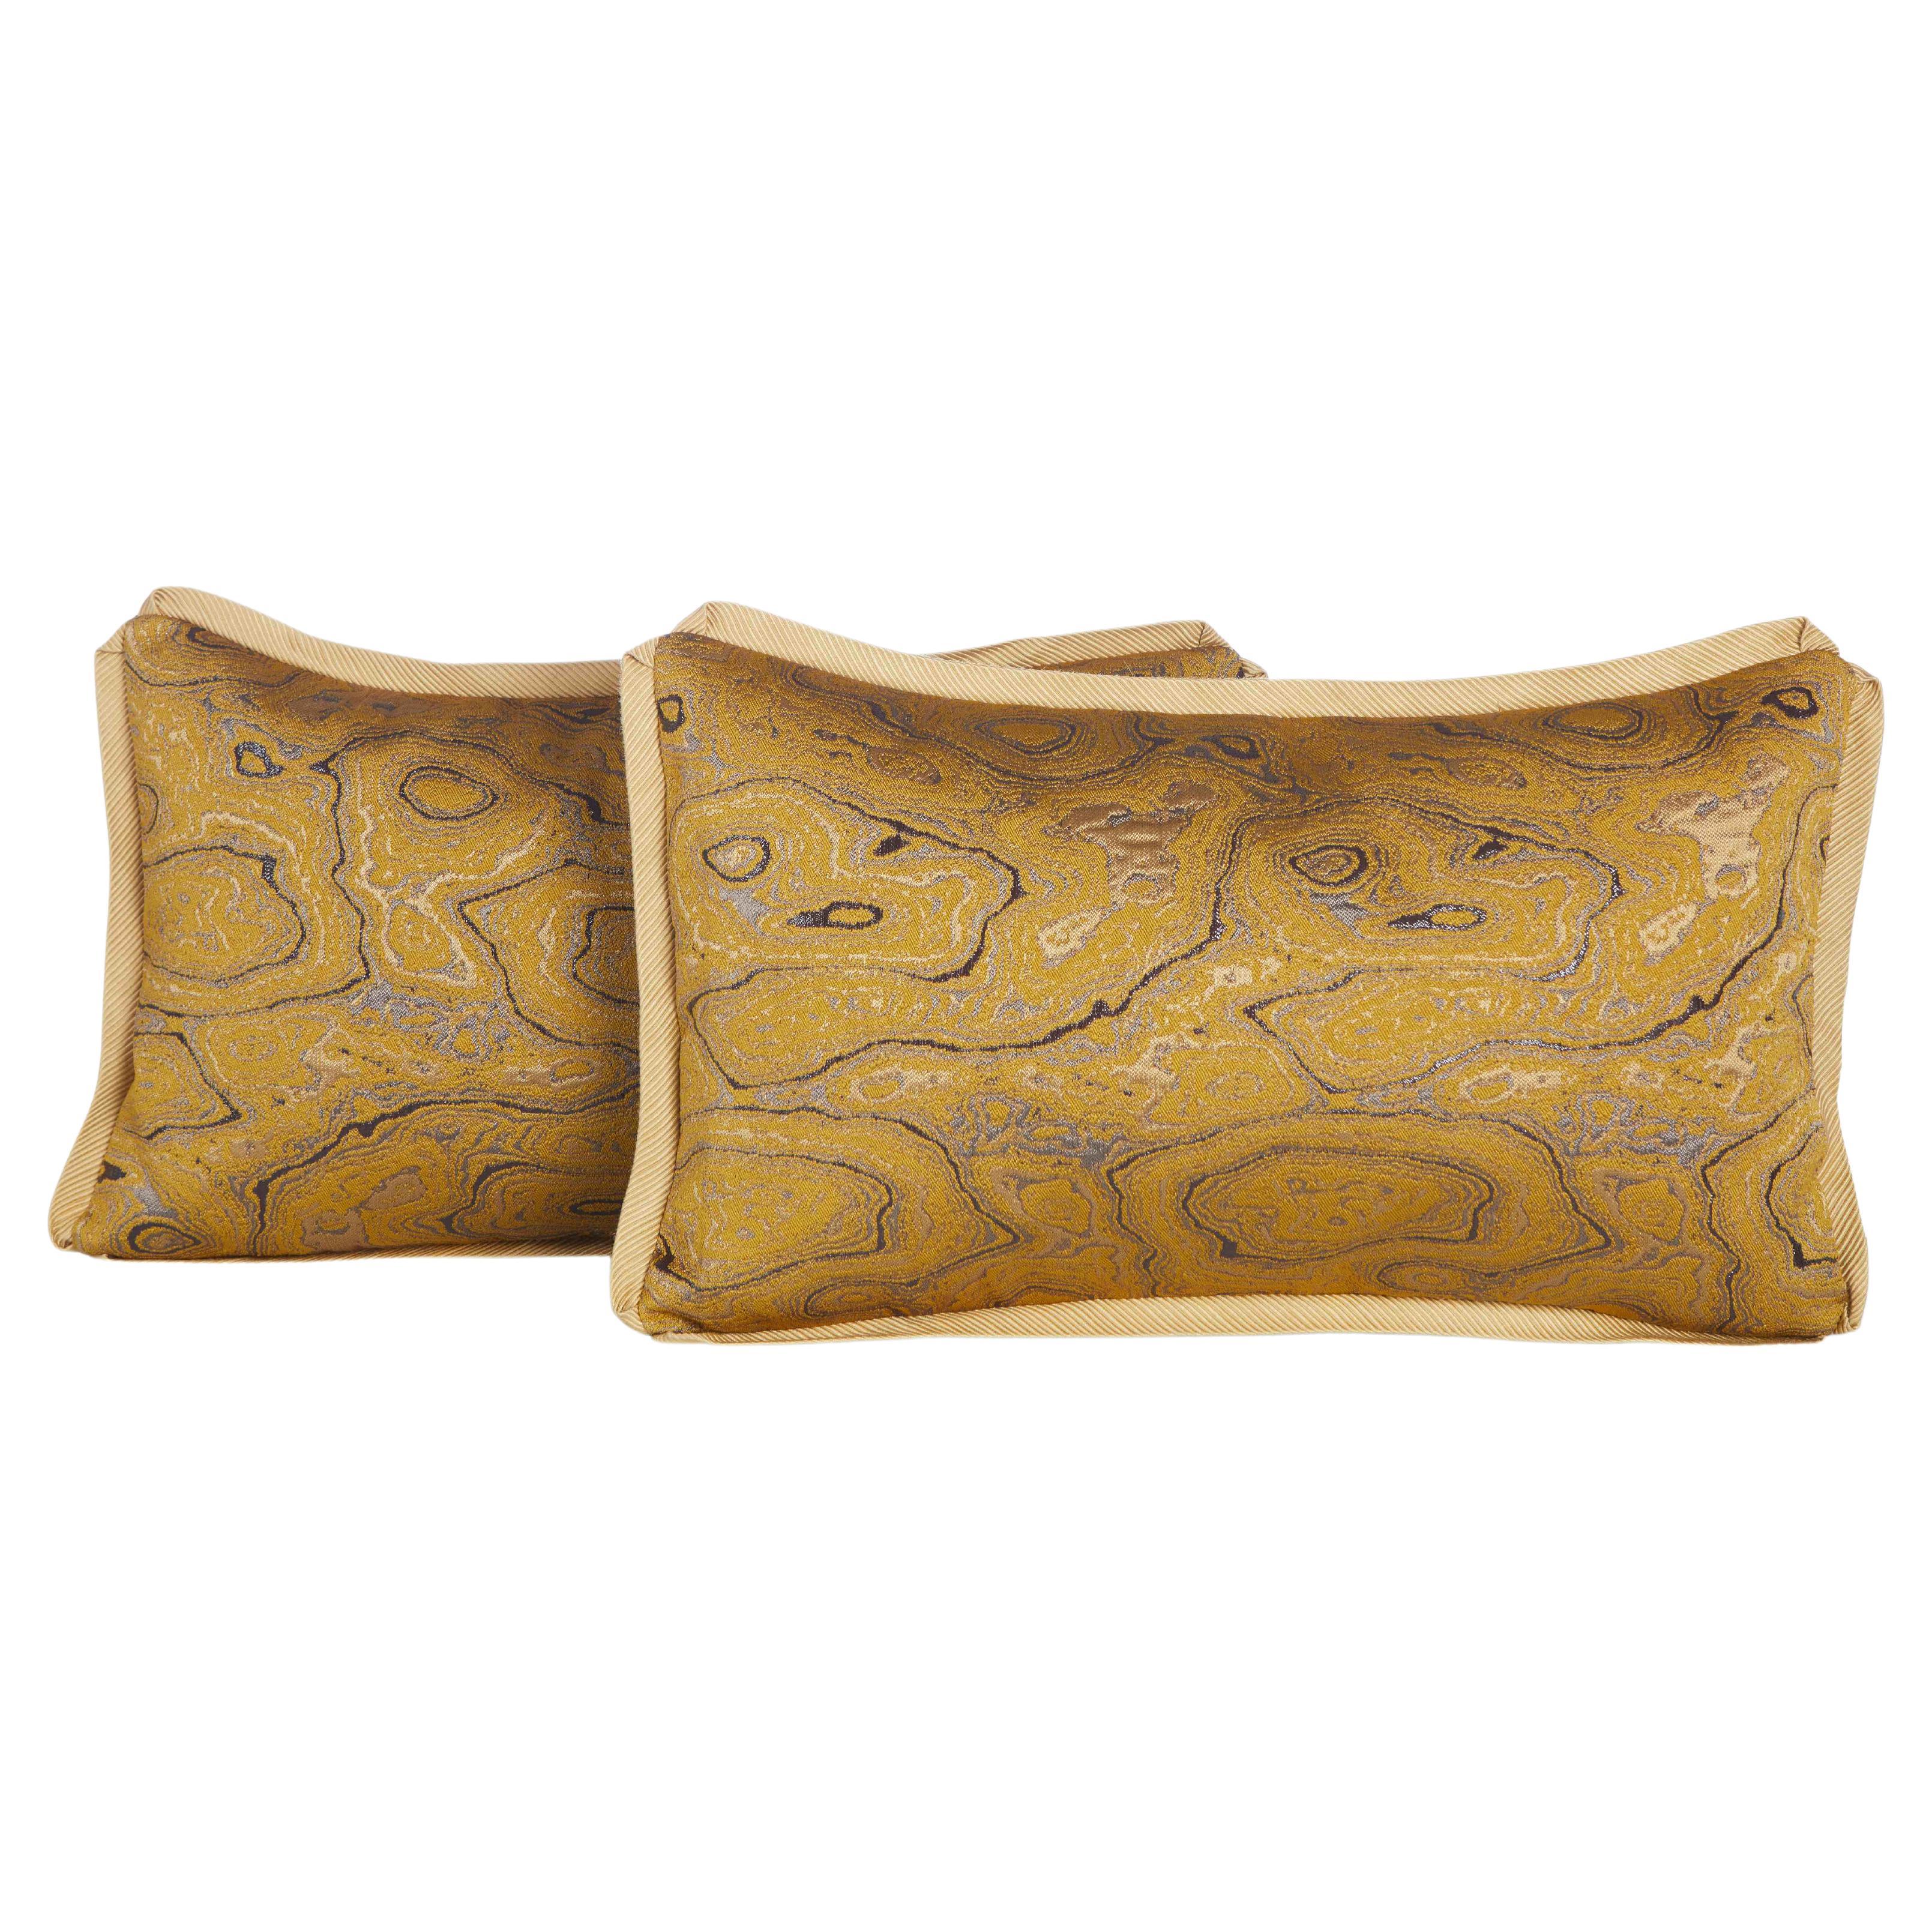 Pair of Brocaded Silk with Metalic Thread Dries Van Noten Fabric Cushion